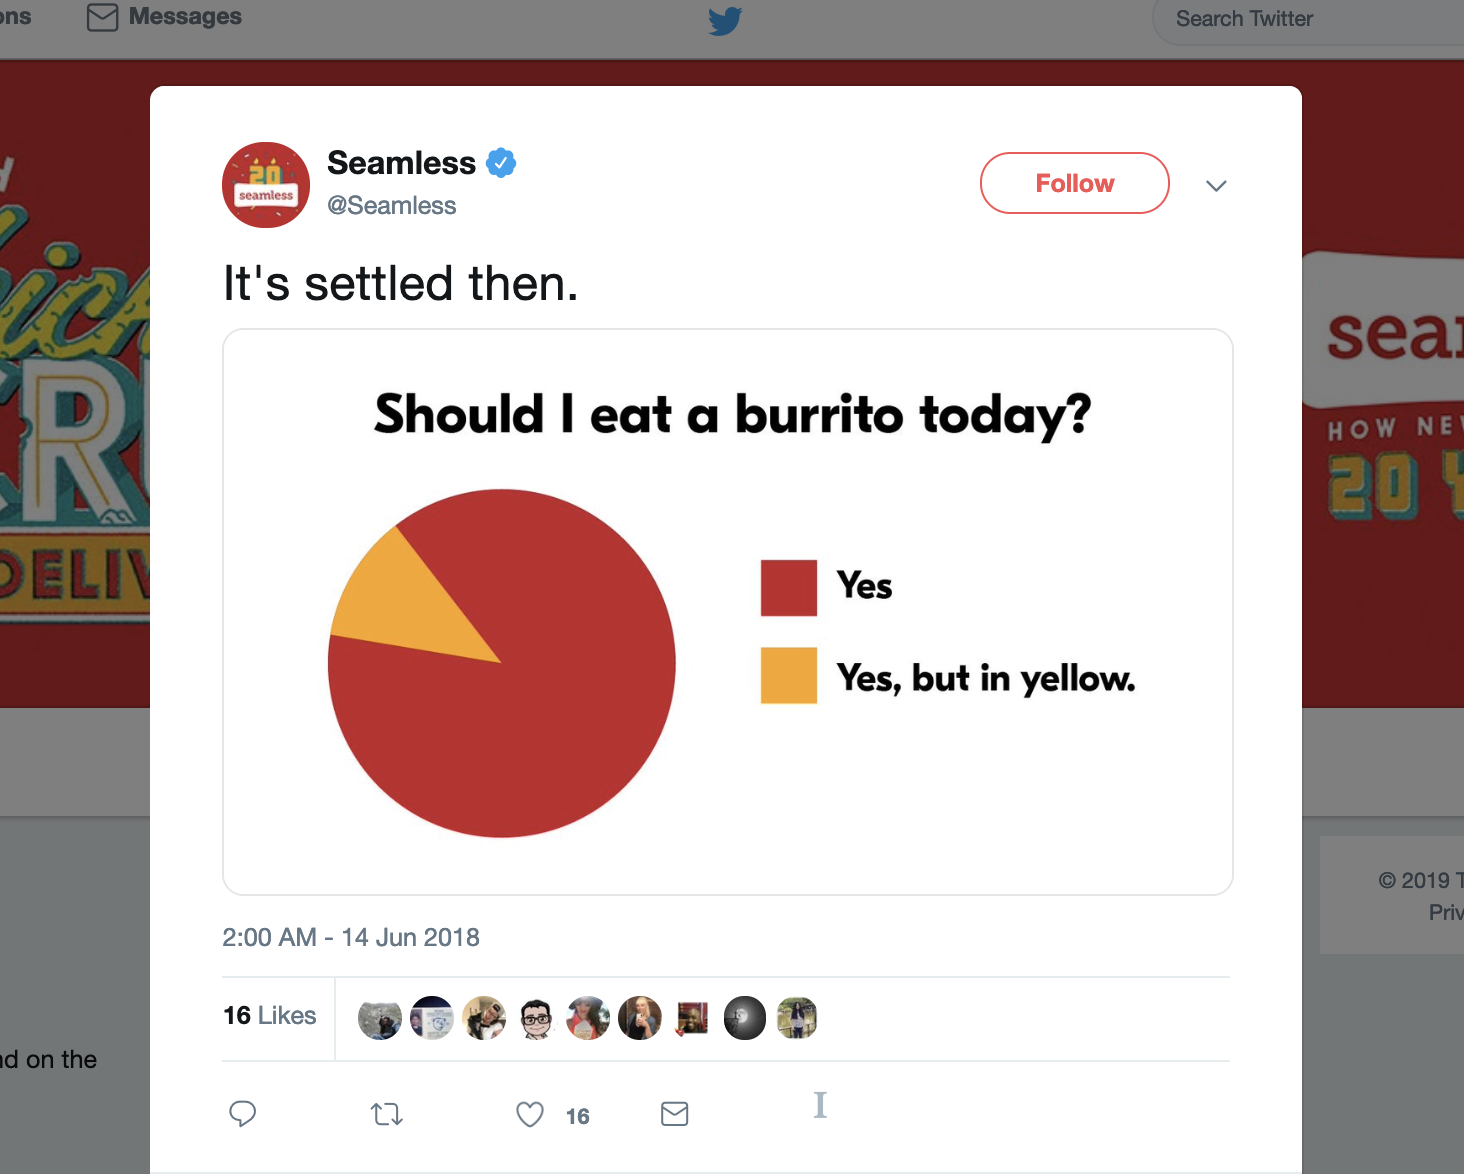 Seamless meme - Should I eat a burrito today?